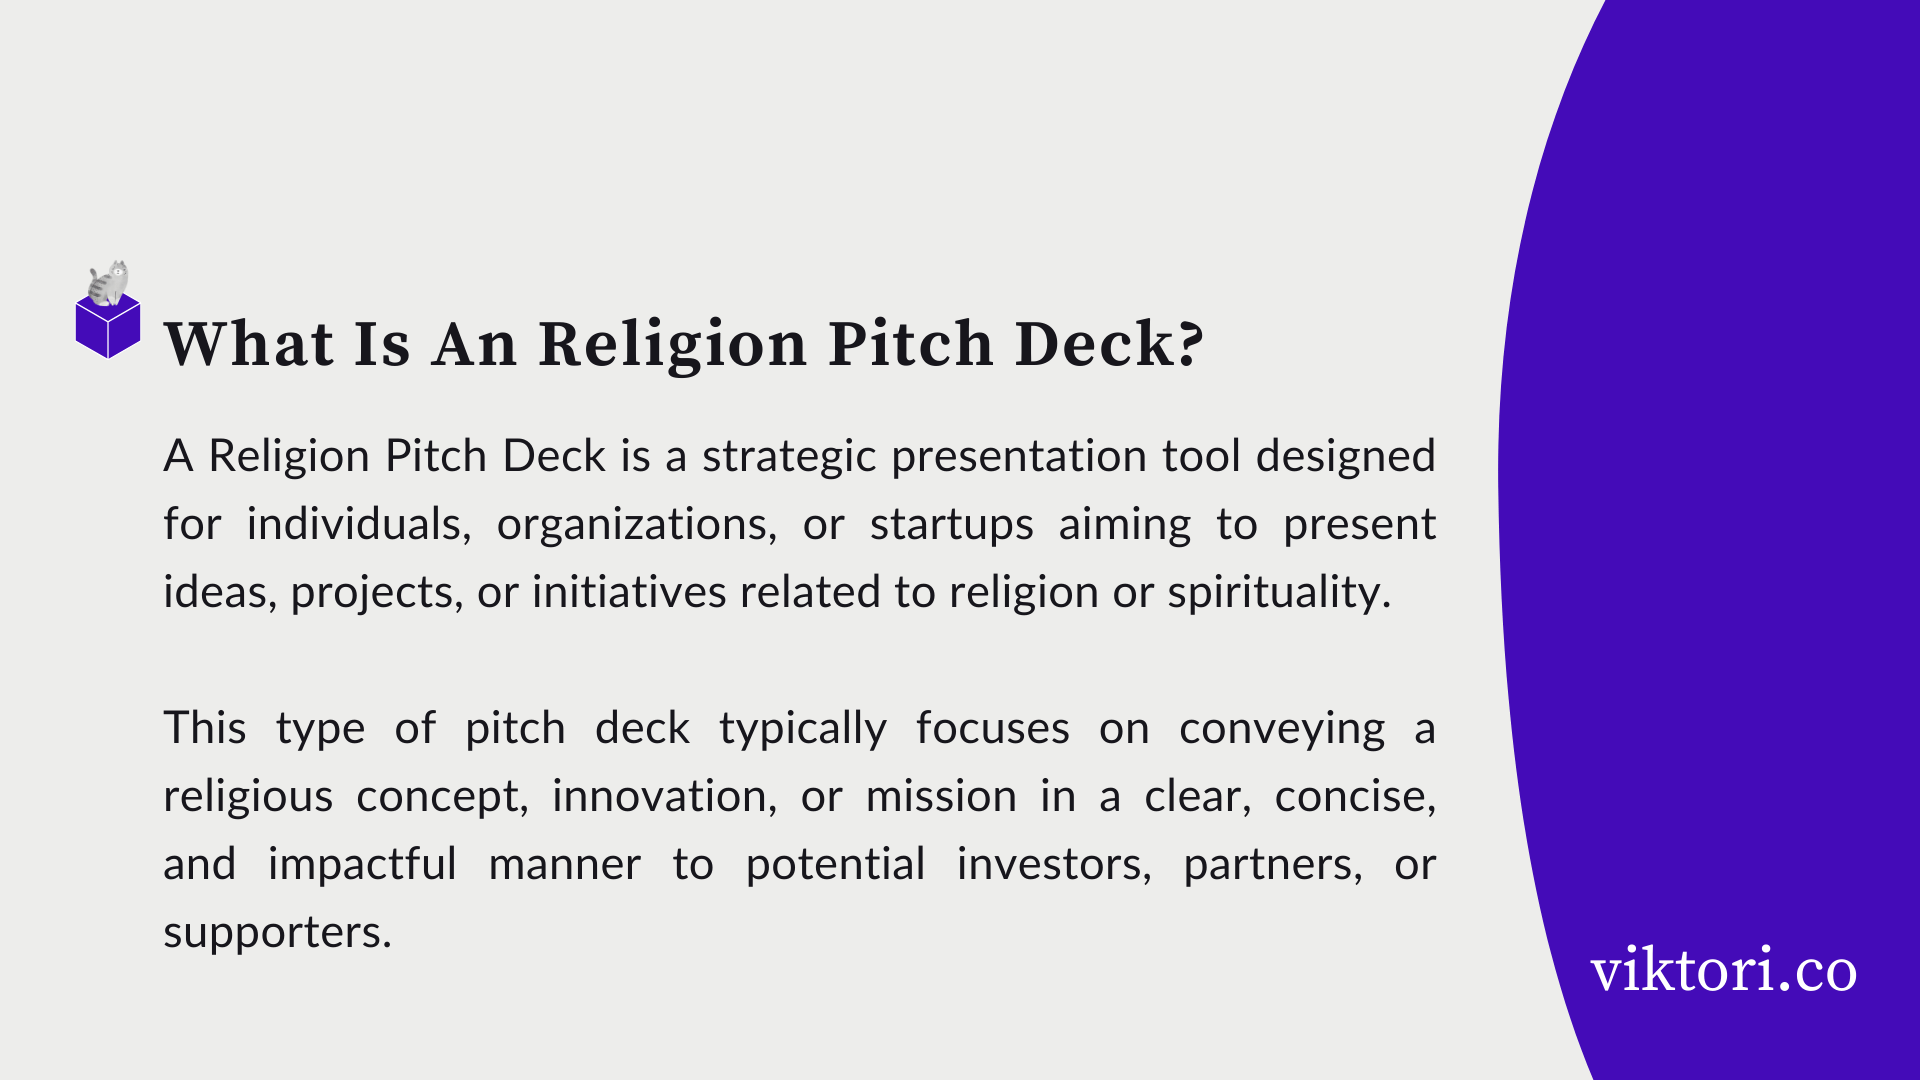 religion pitch deck definition